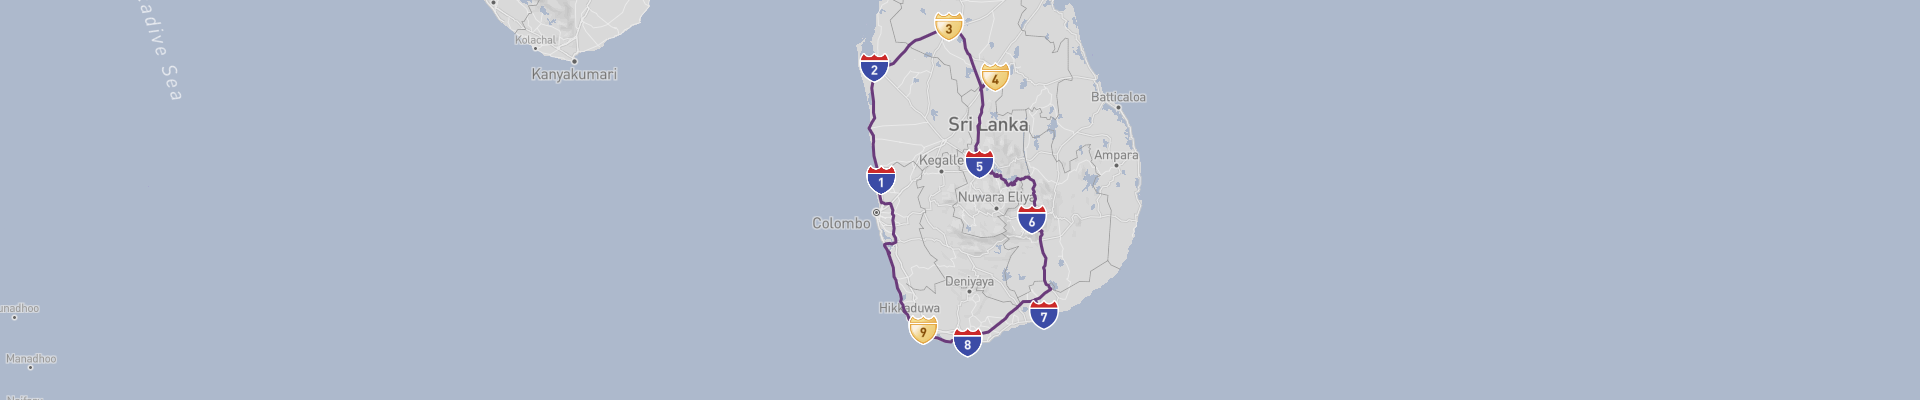 Itinéraire Sri Lanka 